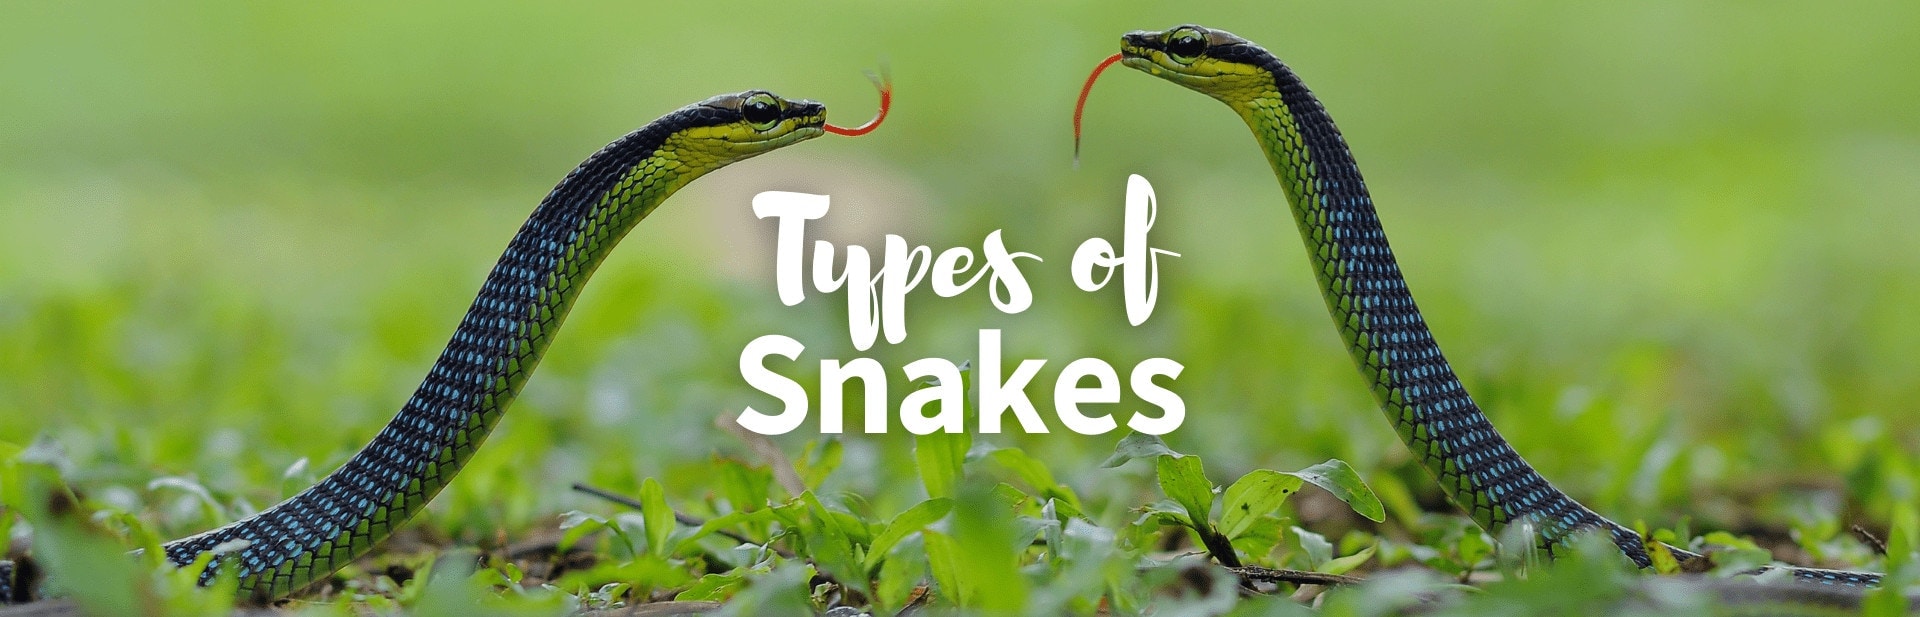 25 Amazing Types of Snakes (Photos, Fun Facts & More!) - Outforia